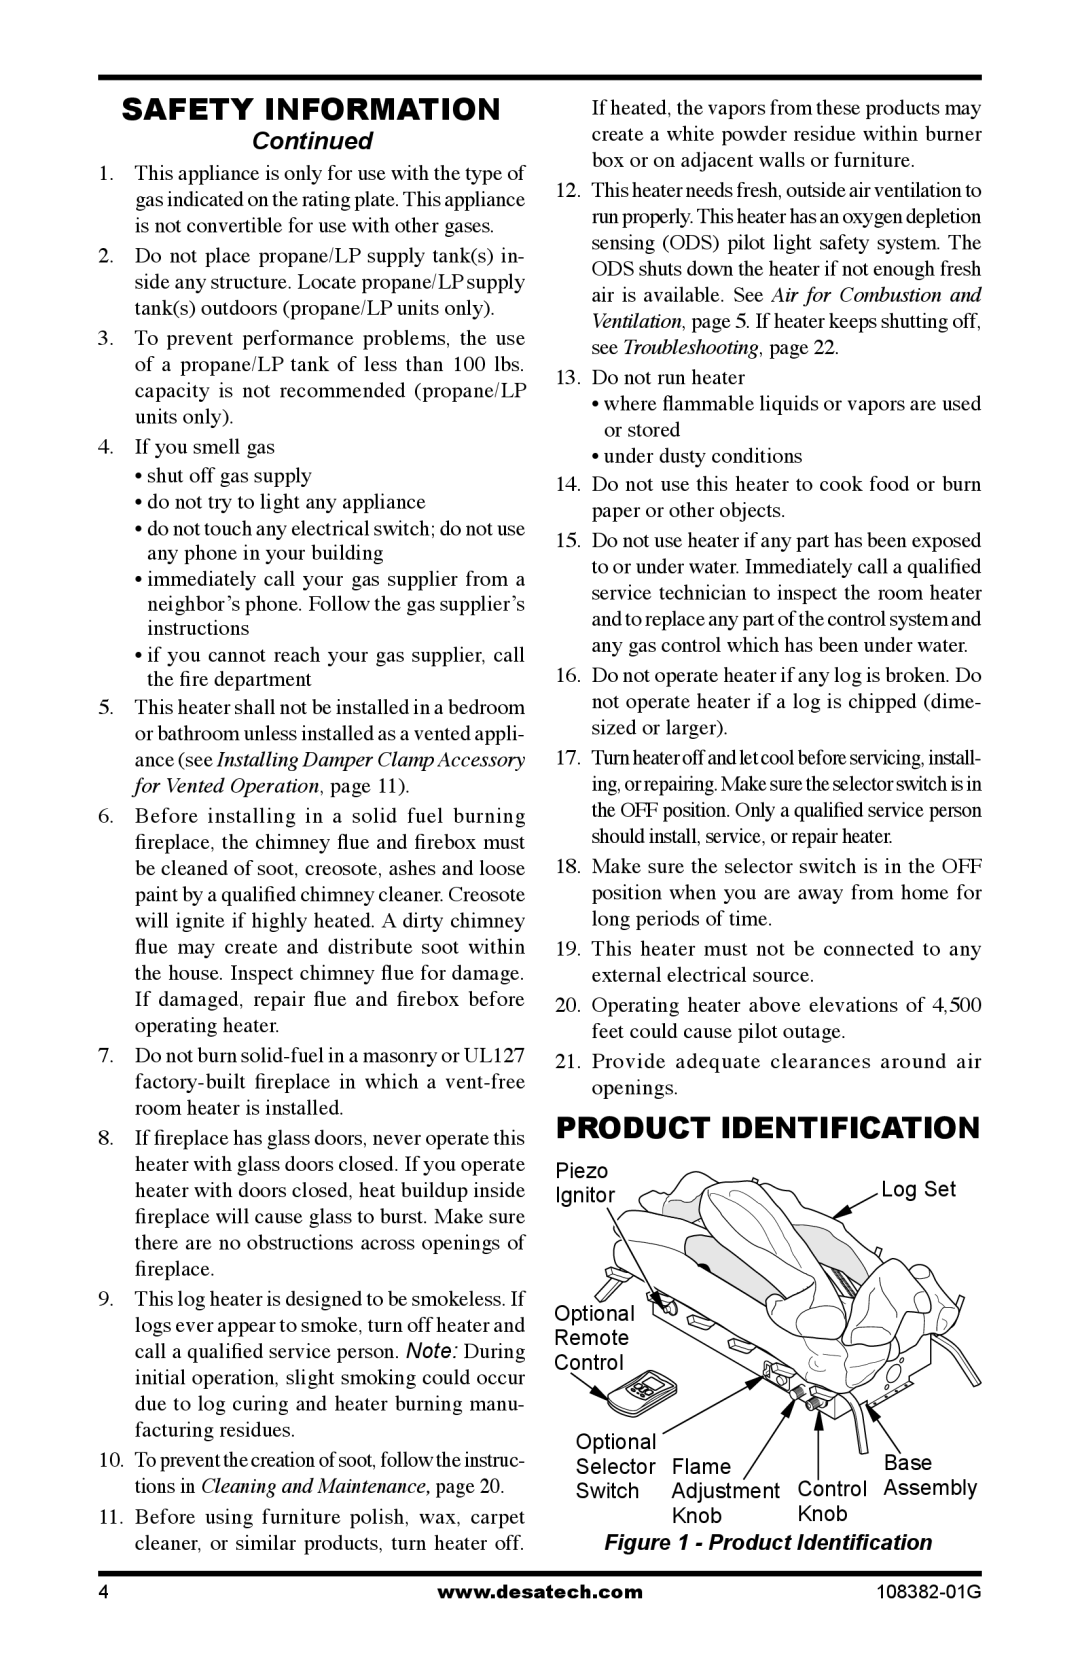 Desa FVFM27PR installation manual Safety Information, Product Identification, Continued 